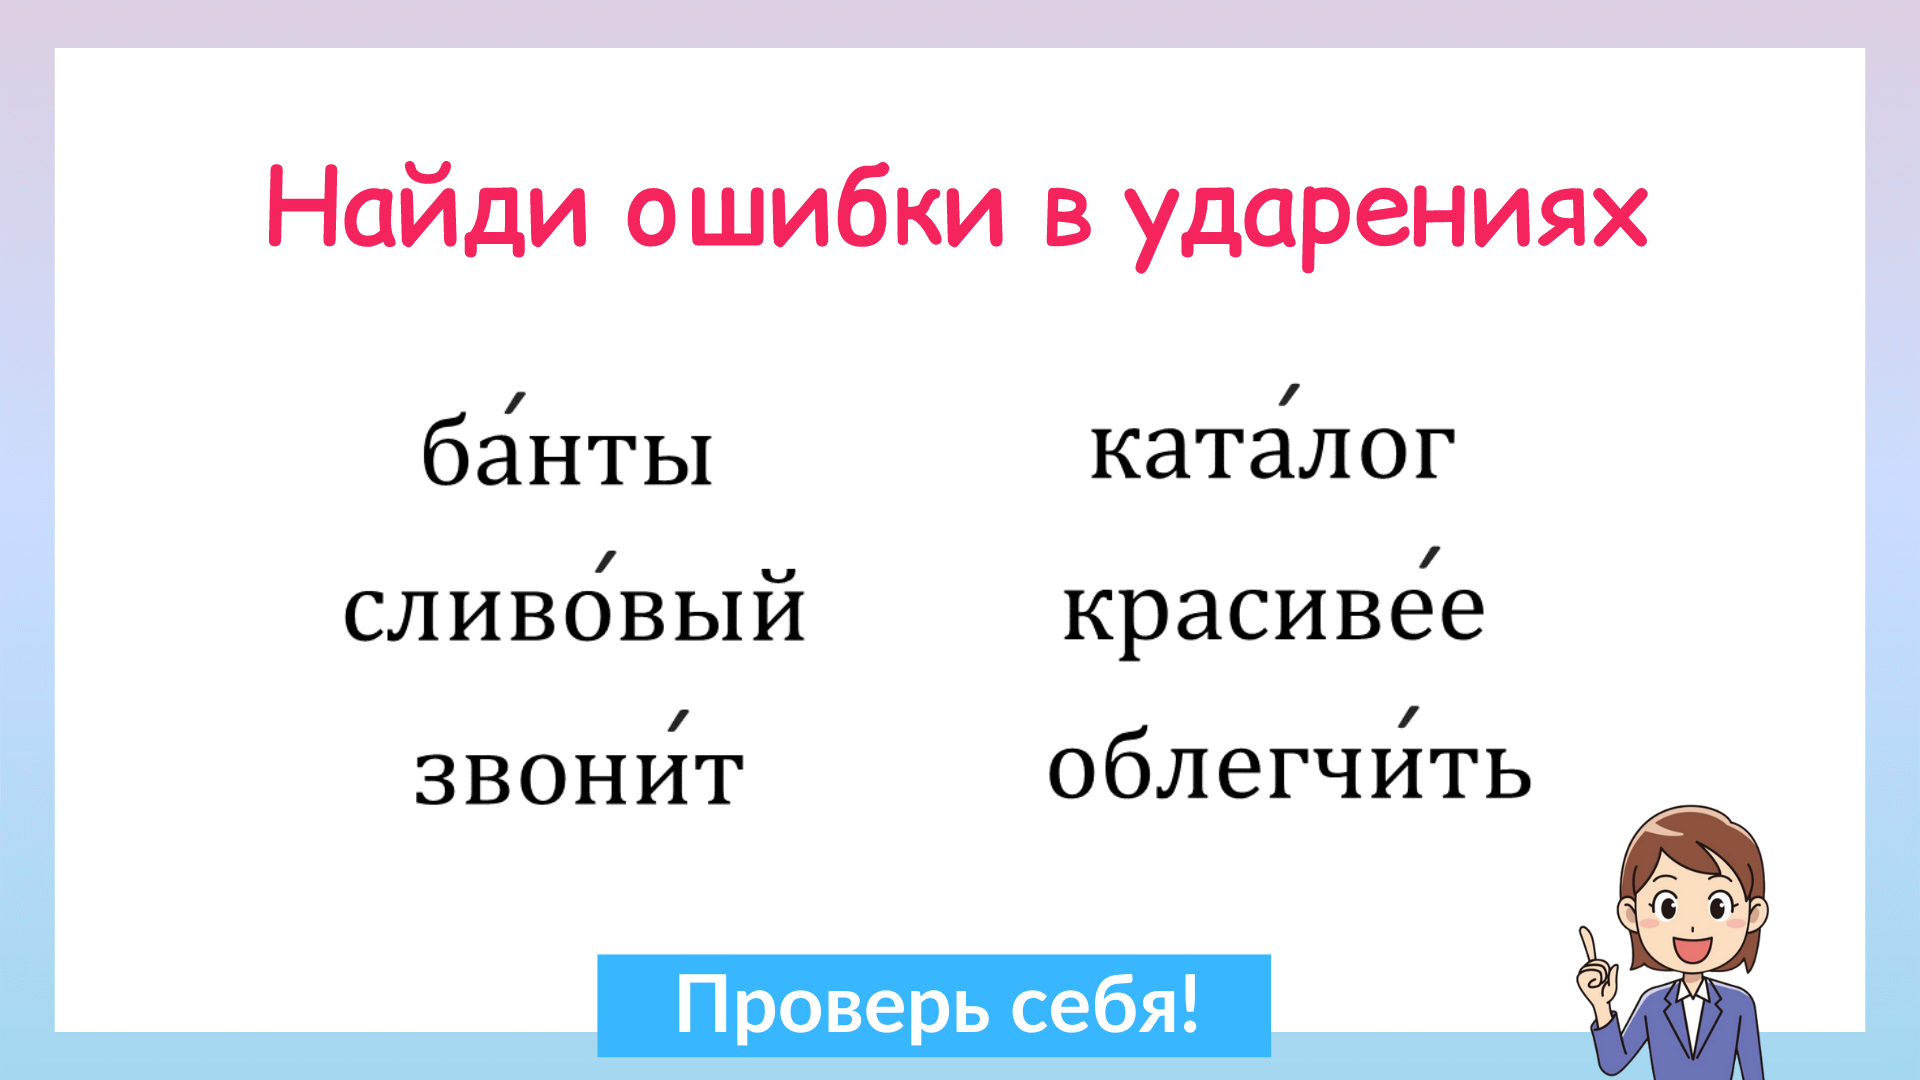 Ударения в словах. Найдите ошибки в ударениях.. Тест на ударение в словах. Русские слова с ударением.